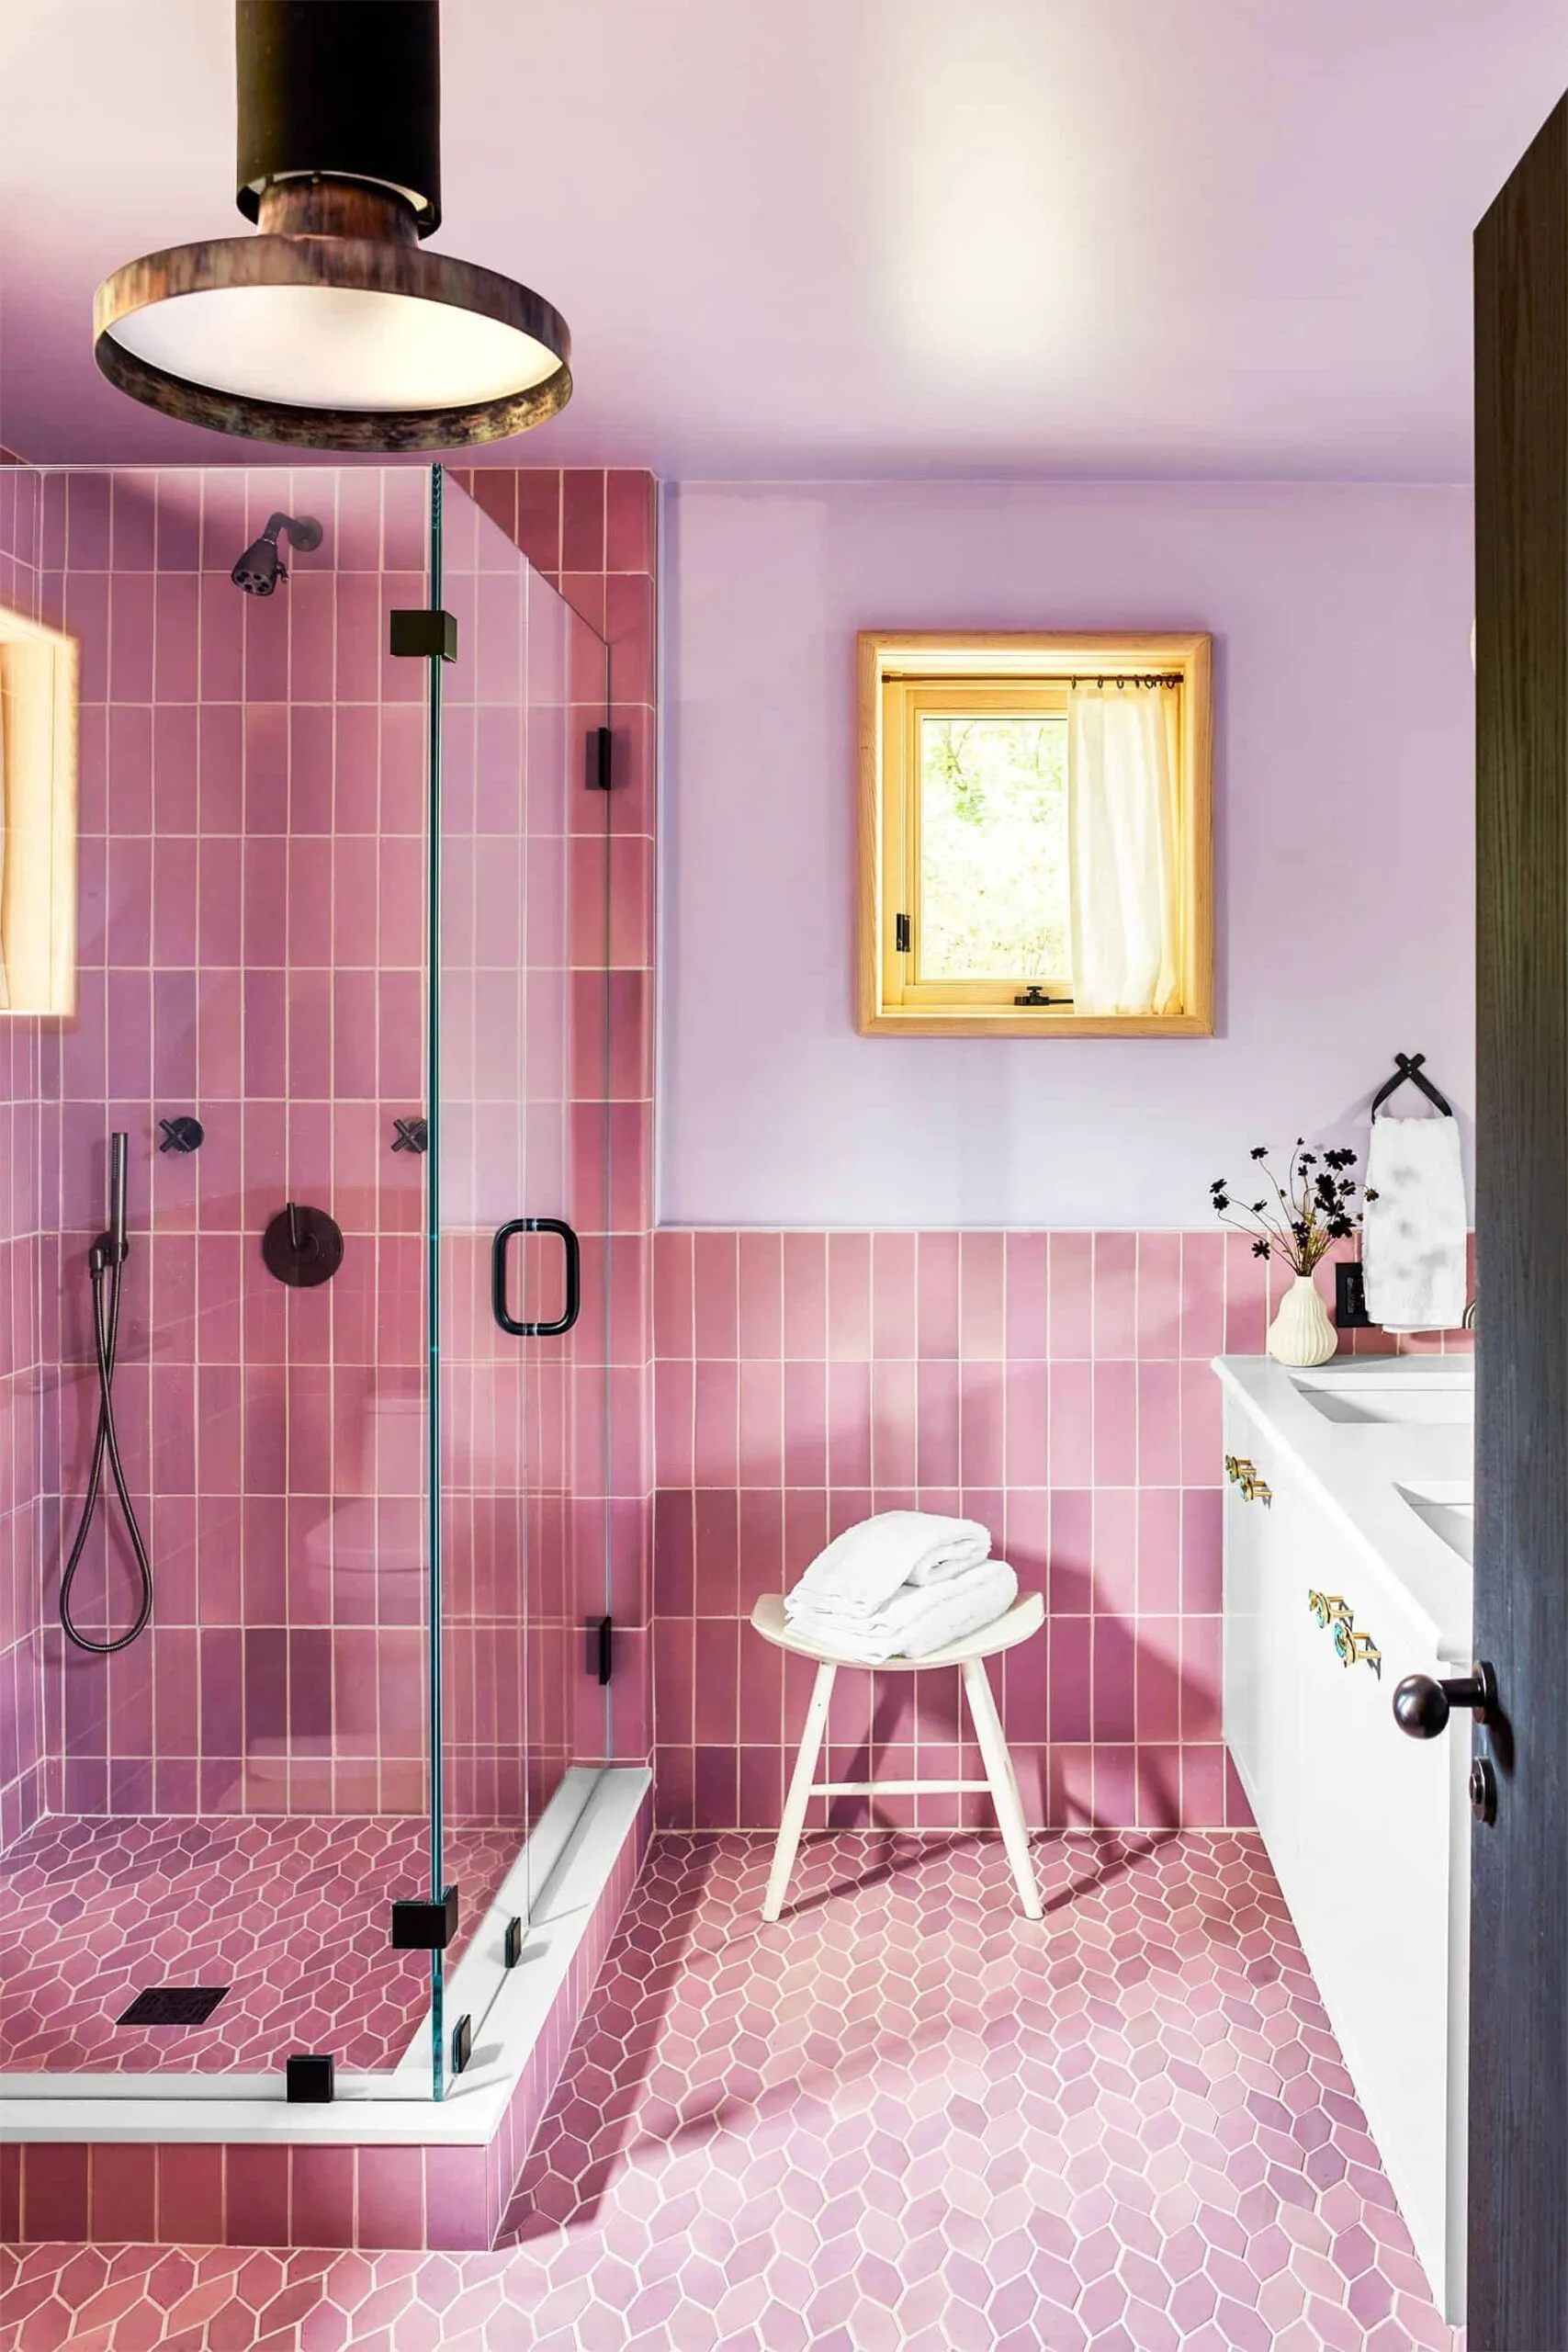 A light pink designer bathroom flooring tiles & tiling design with lights, chair and more